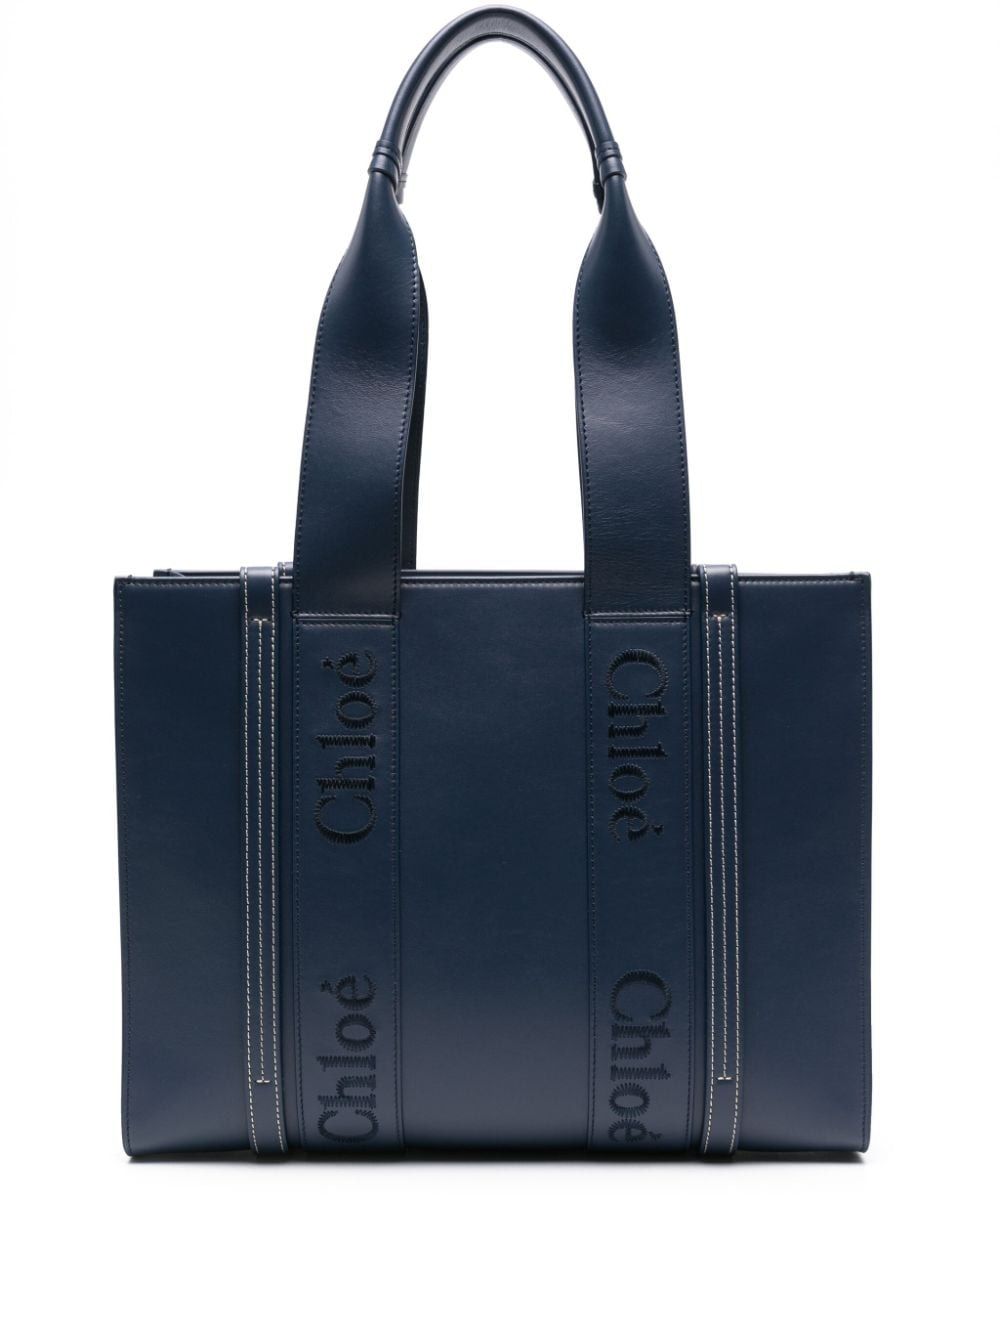 CHLOÉ Navy Leather Woody Medium Tote Handbag for Women